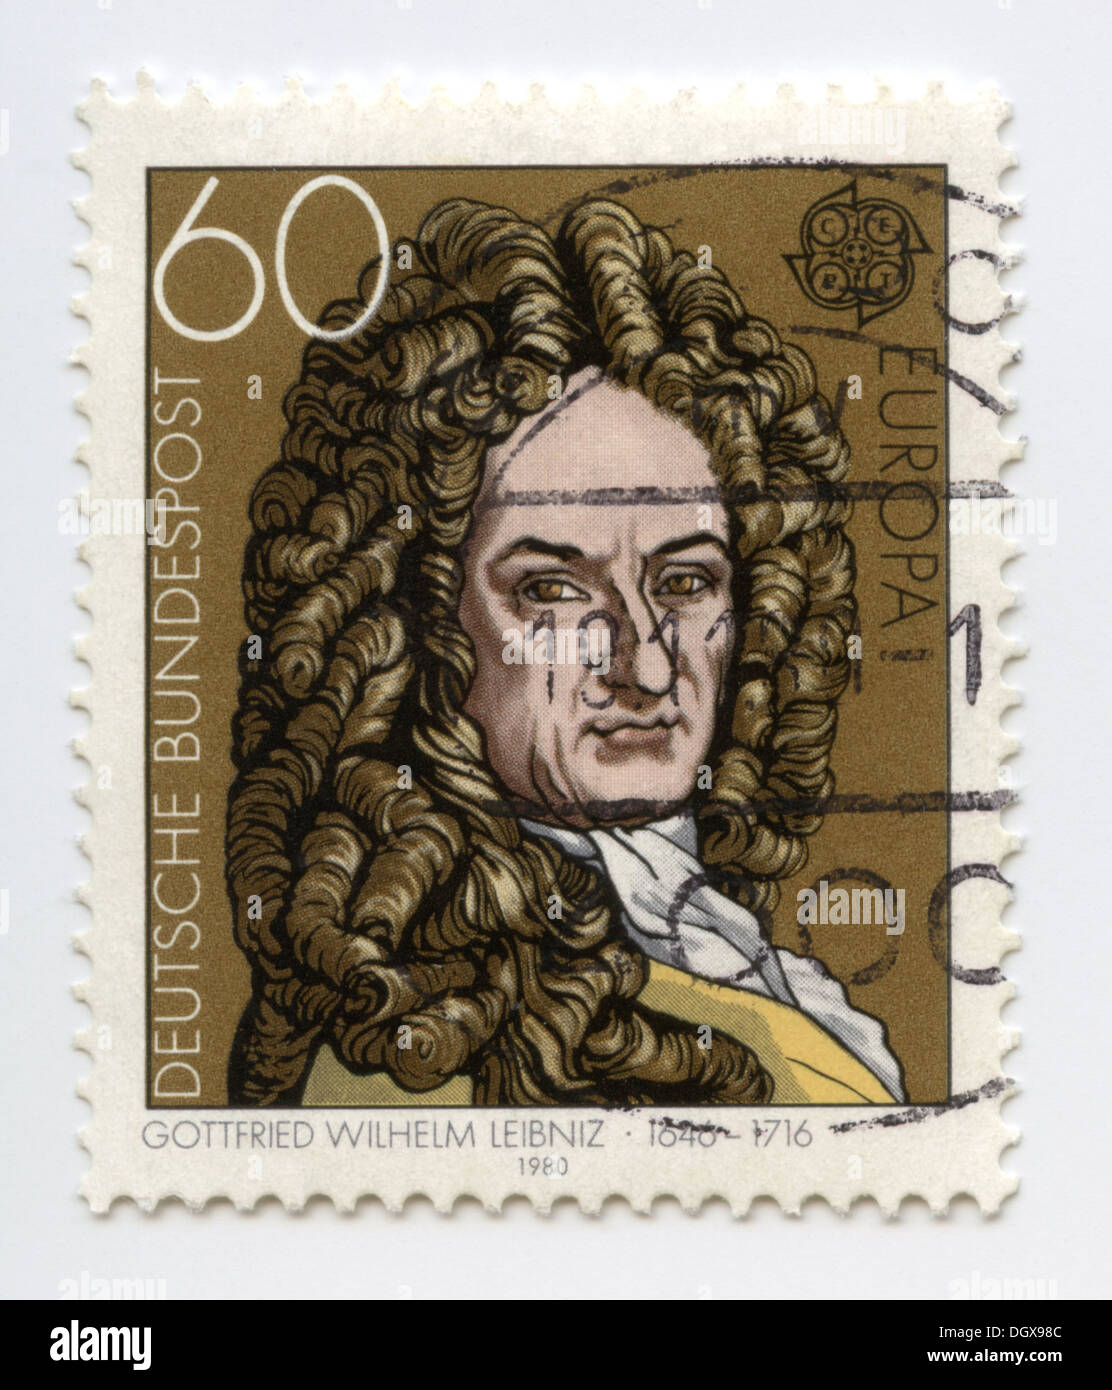 Germany postage stamp depicting Gottfried Wilhelm von Leibniz, a German mathematician and philosopher Stock Photo